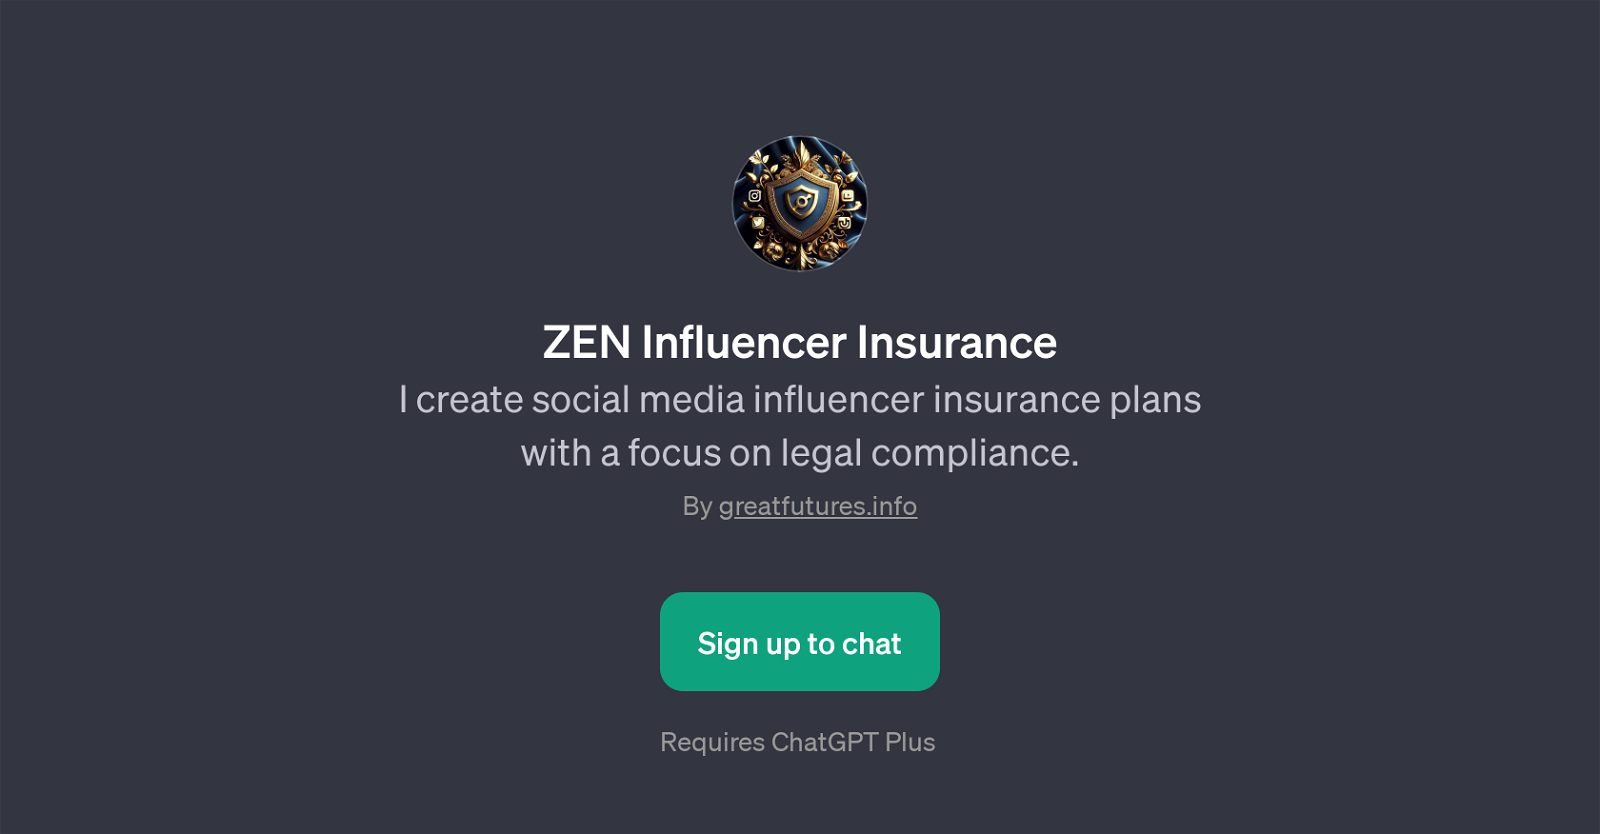 ZEN Influencer Insurance website